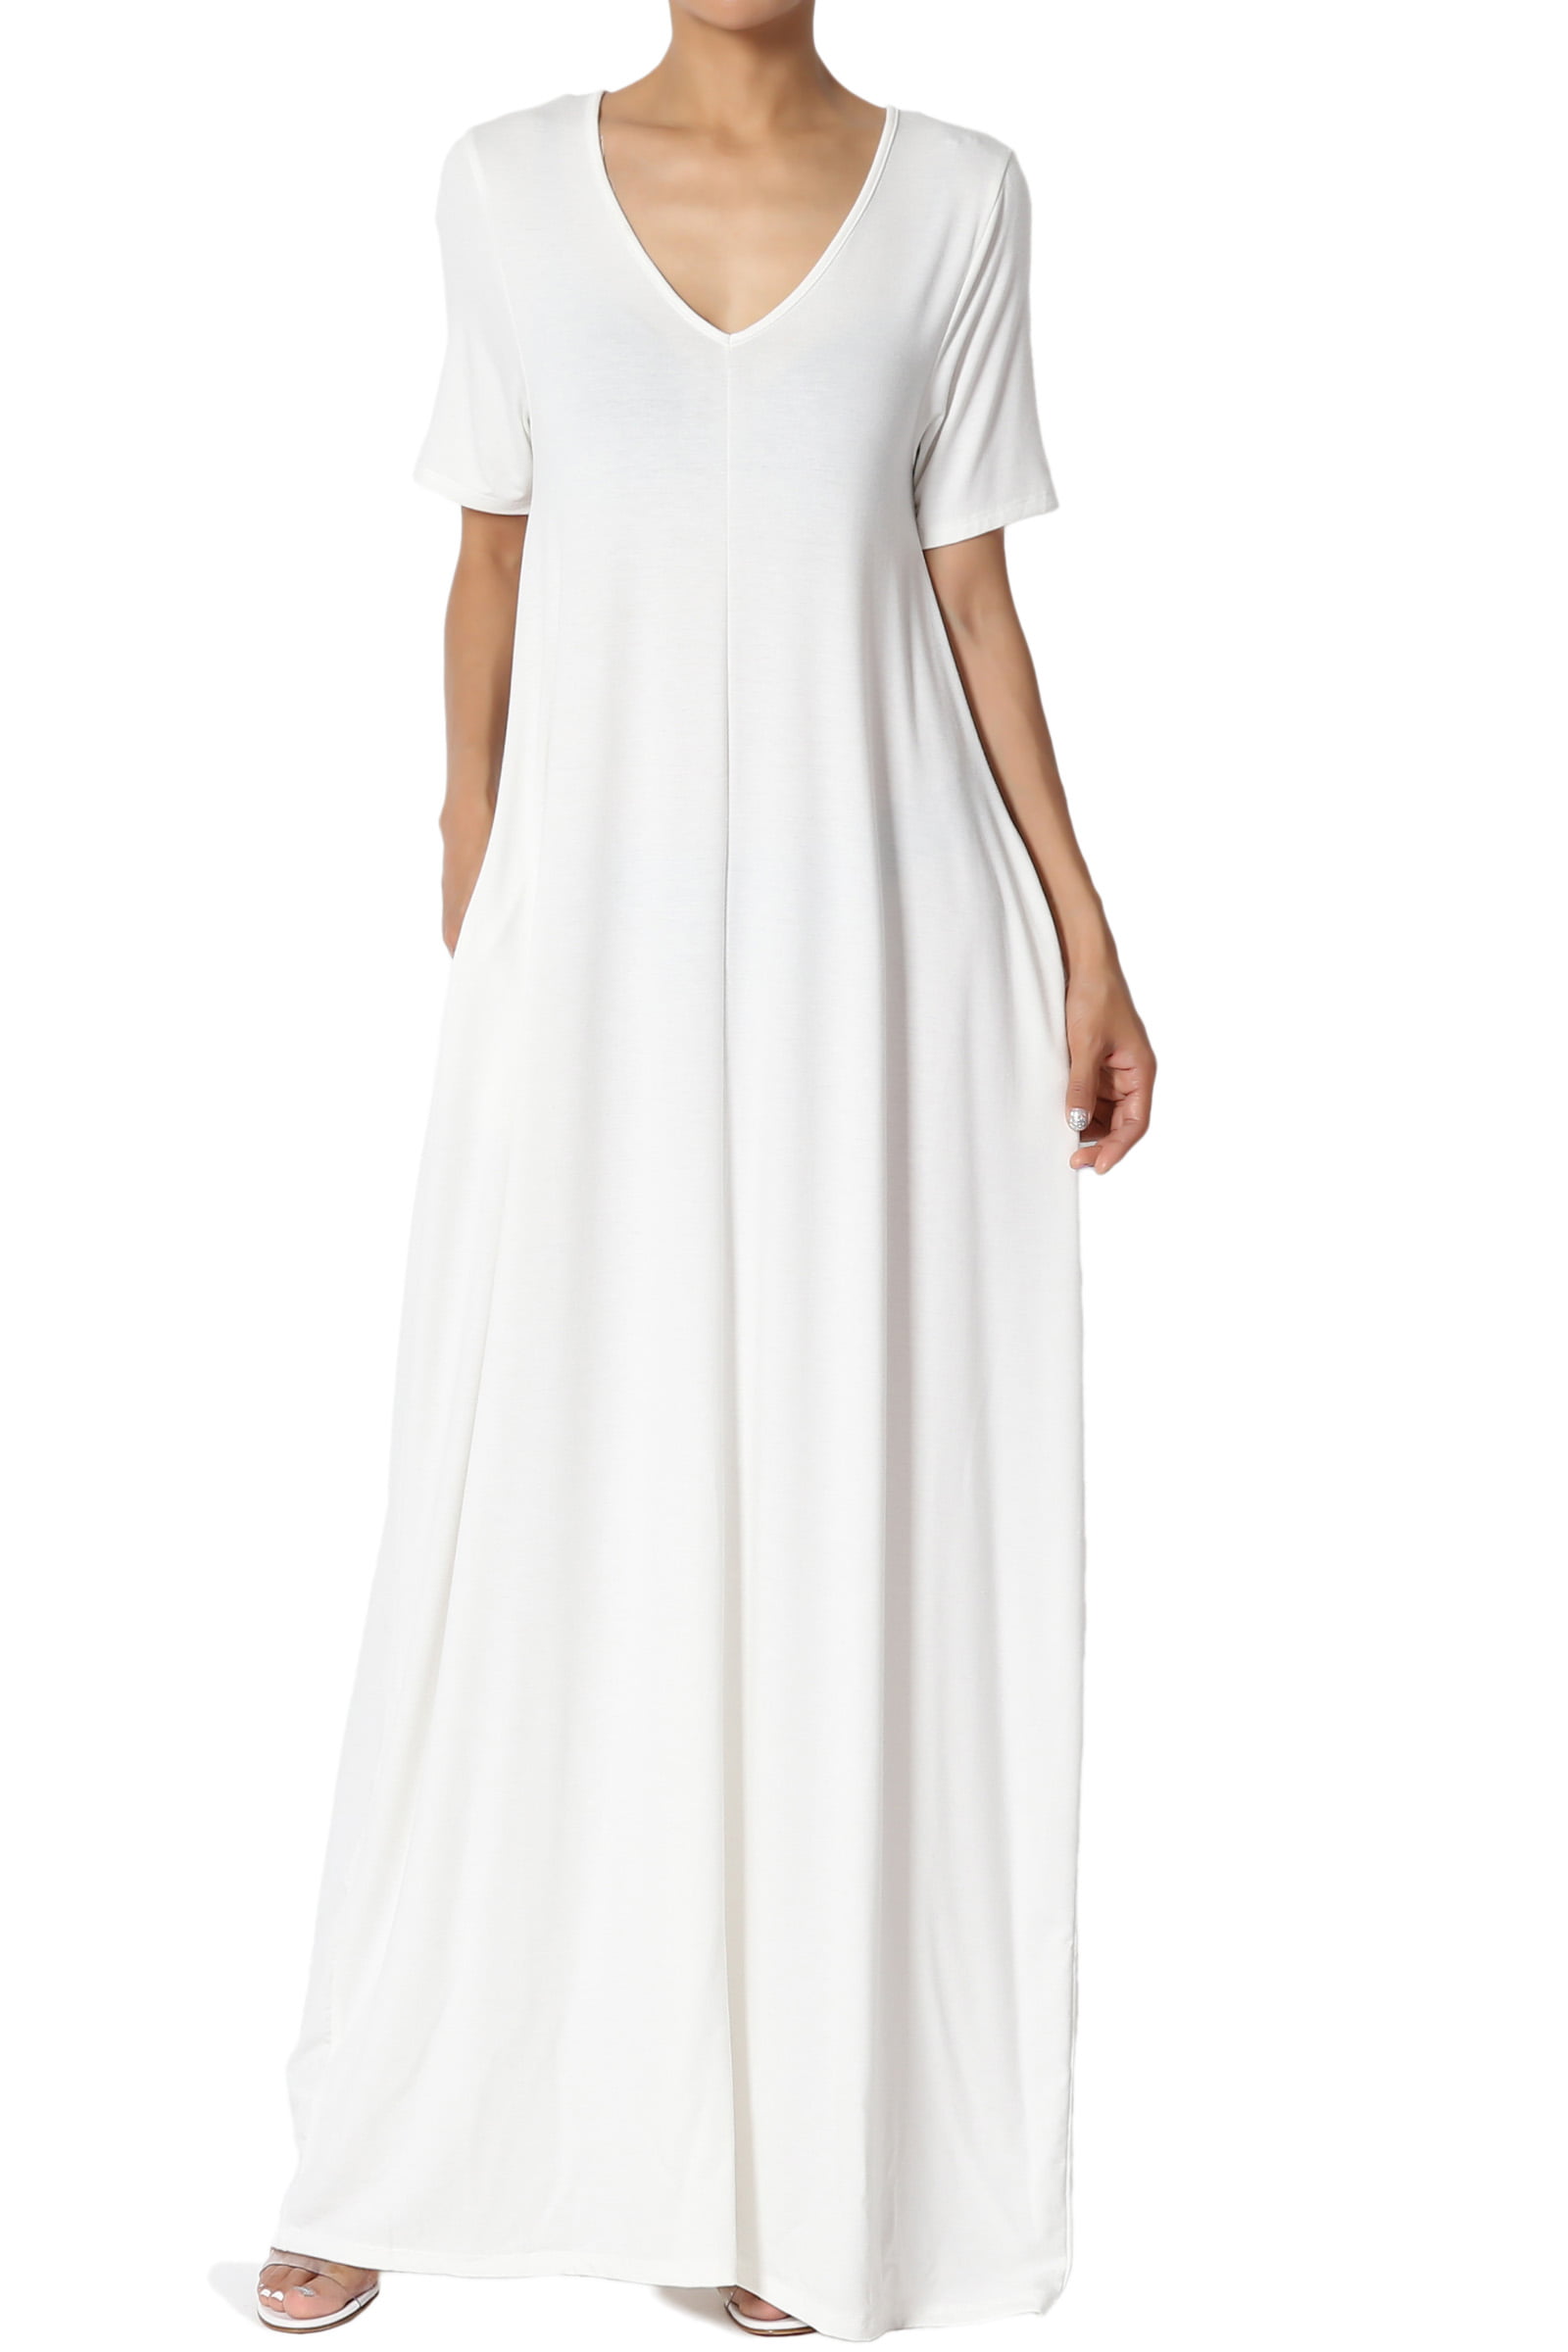 3x white dress